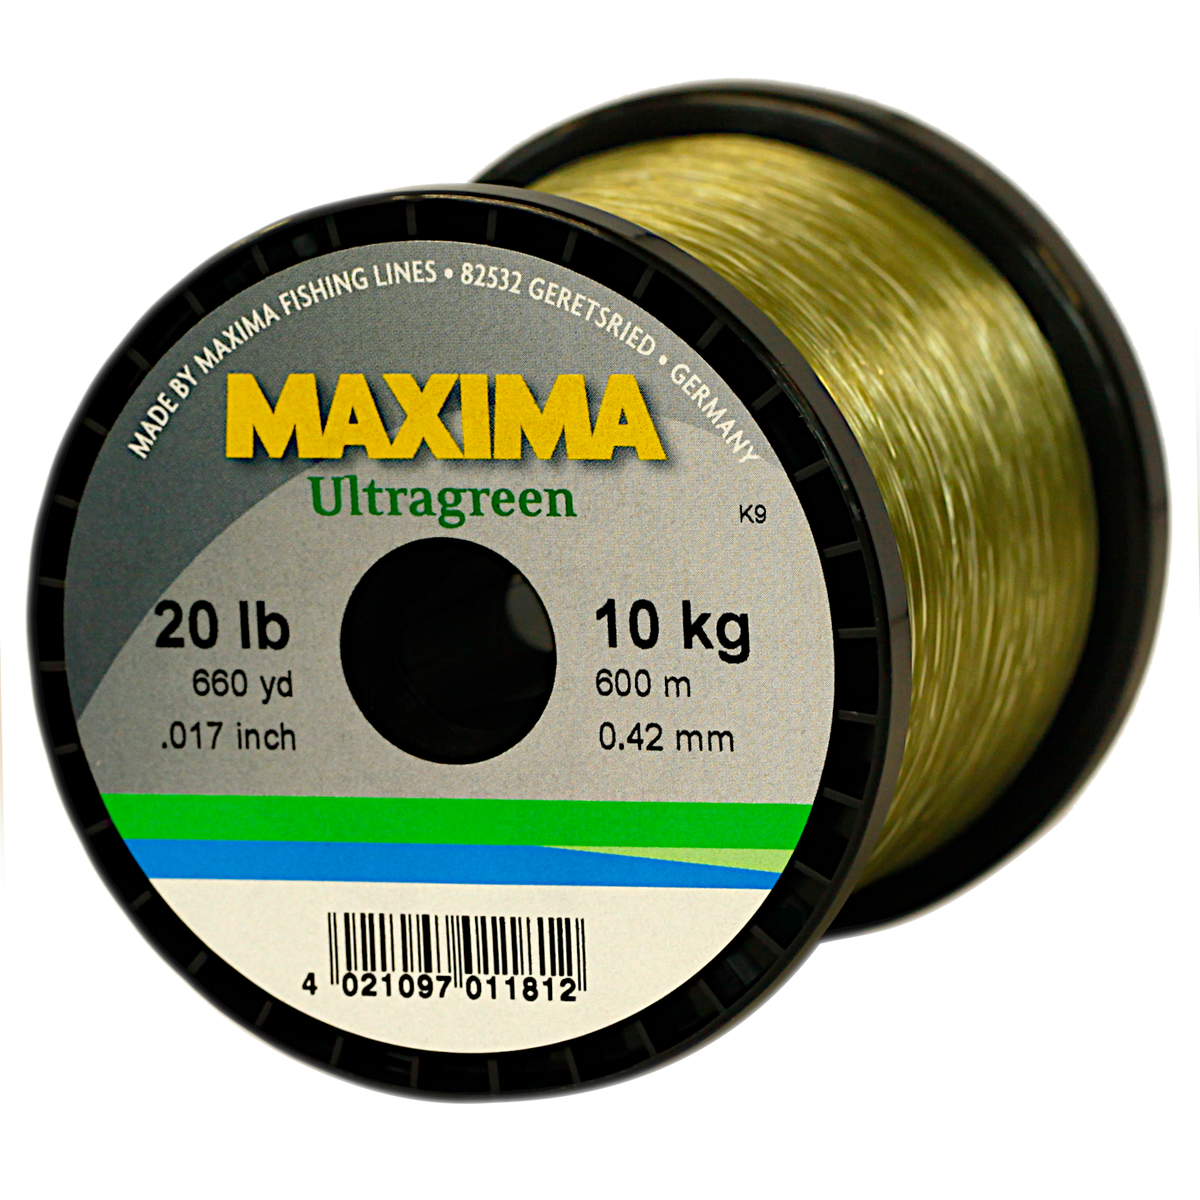 Maxima Nylon Fishing Line, 10KG/20LB 0.42MM, Colour Ultra Green, 600m Spool, Shop Today. Get it Tomorrow!